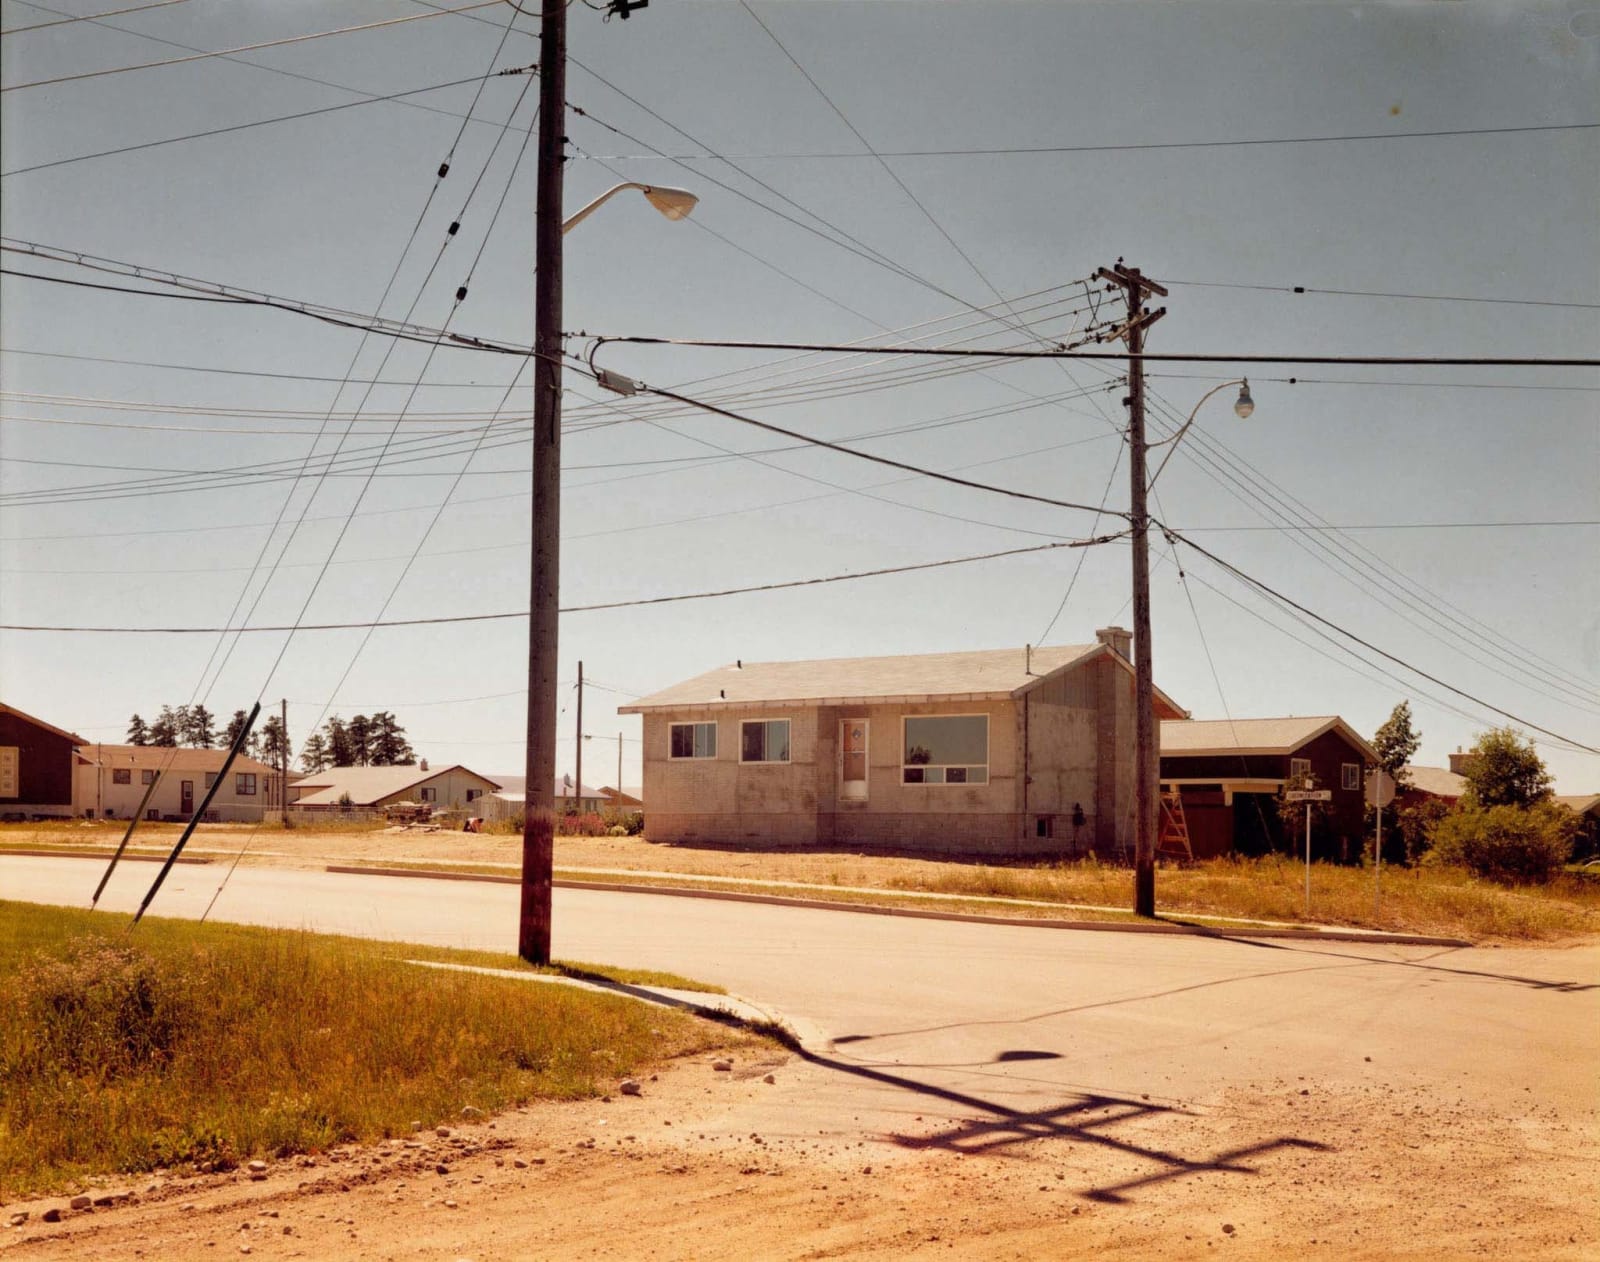 Stephen Shore, Wilde Street and Colonization Avenue, Dryden, Ontario, August 15, 1974